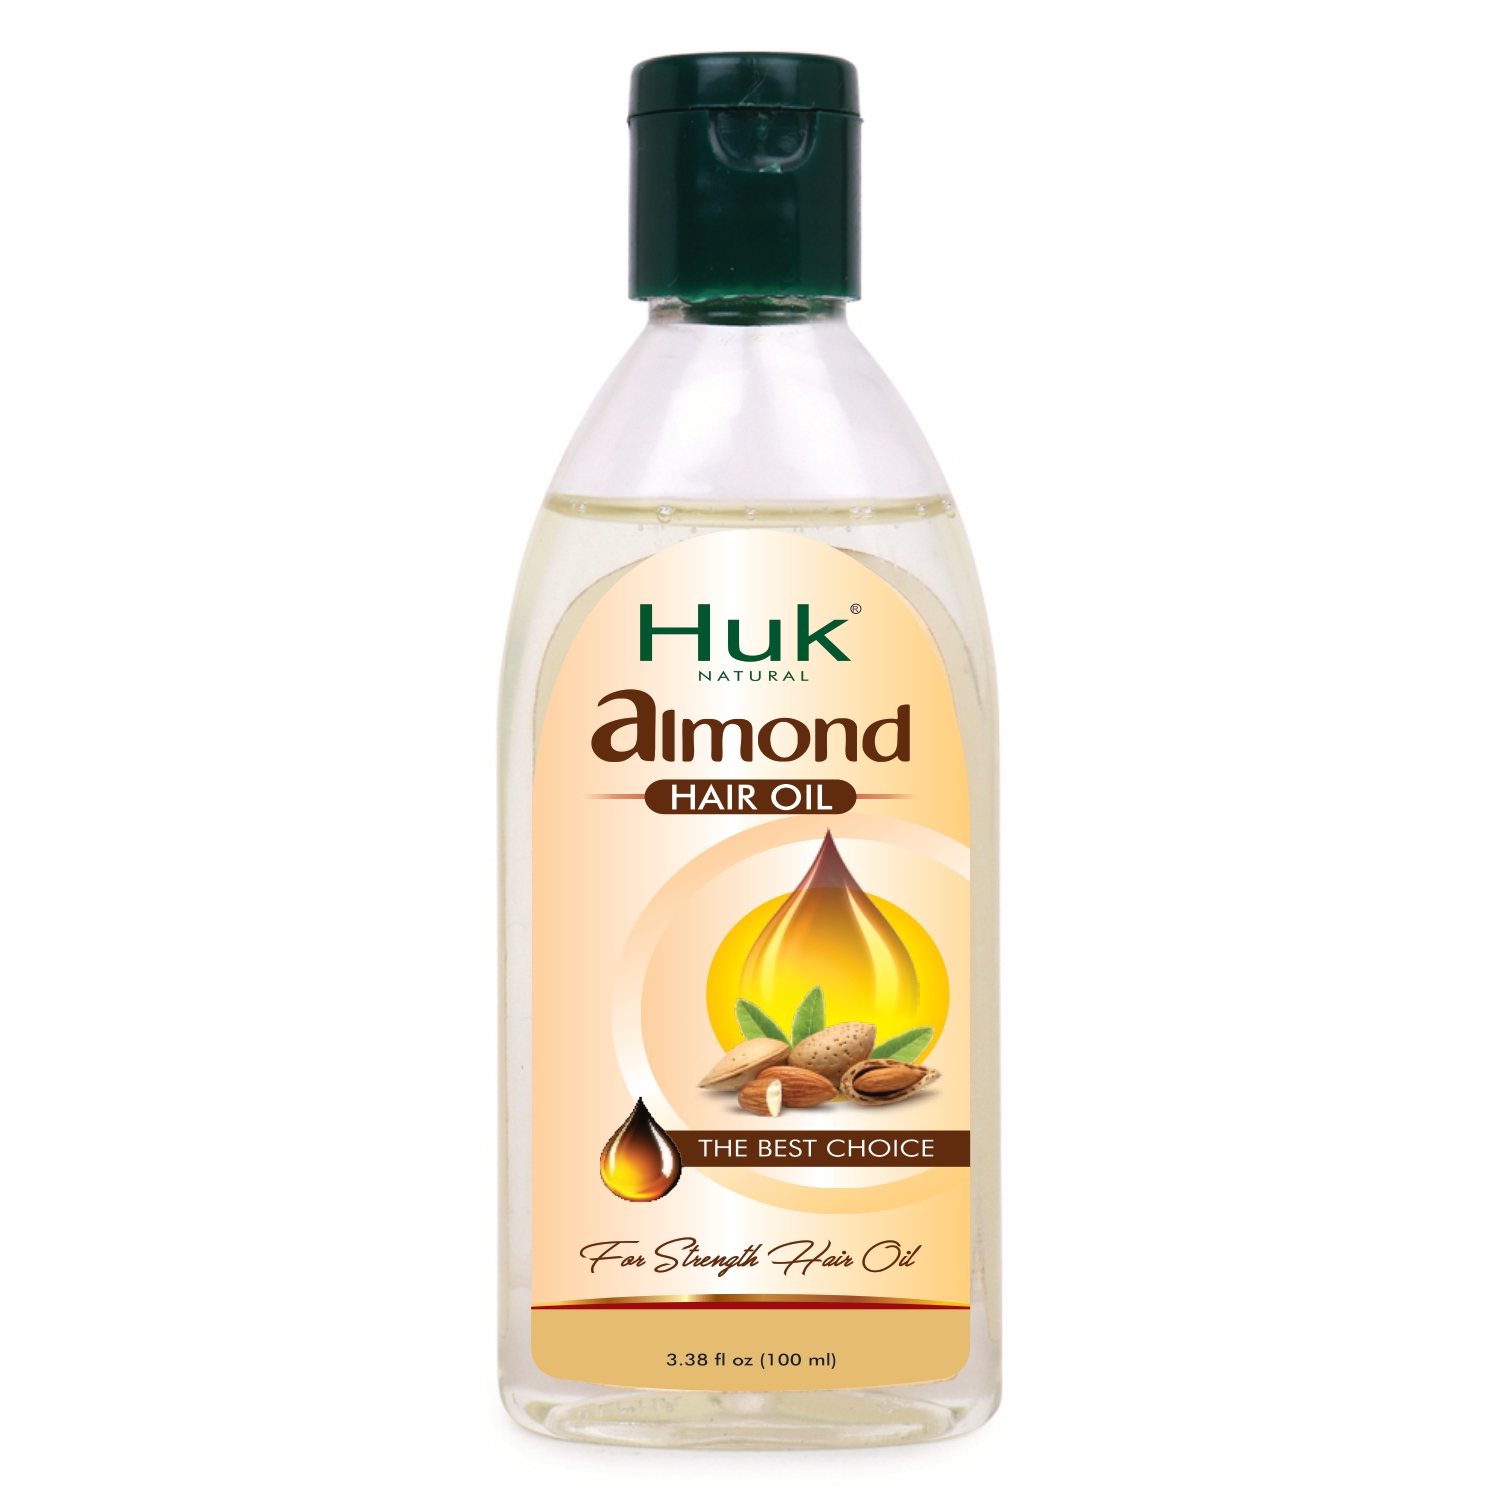 Huk Almond Hair Oil 100ml from Huk